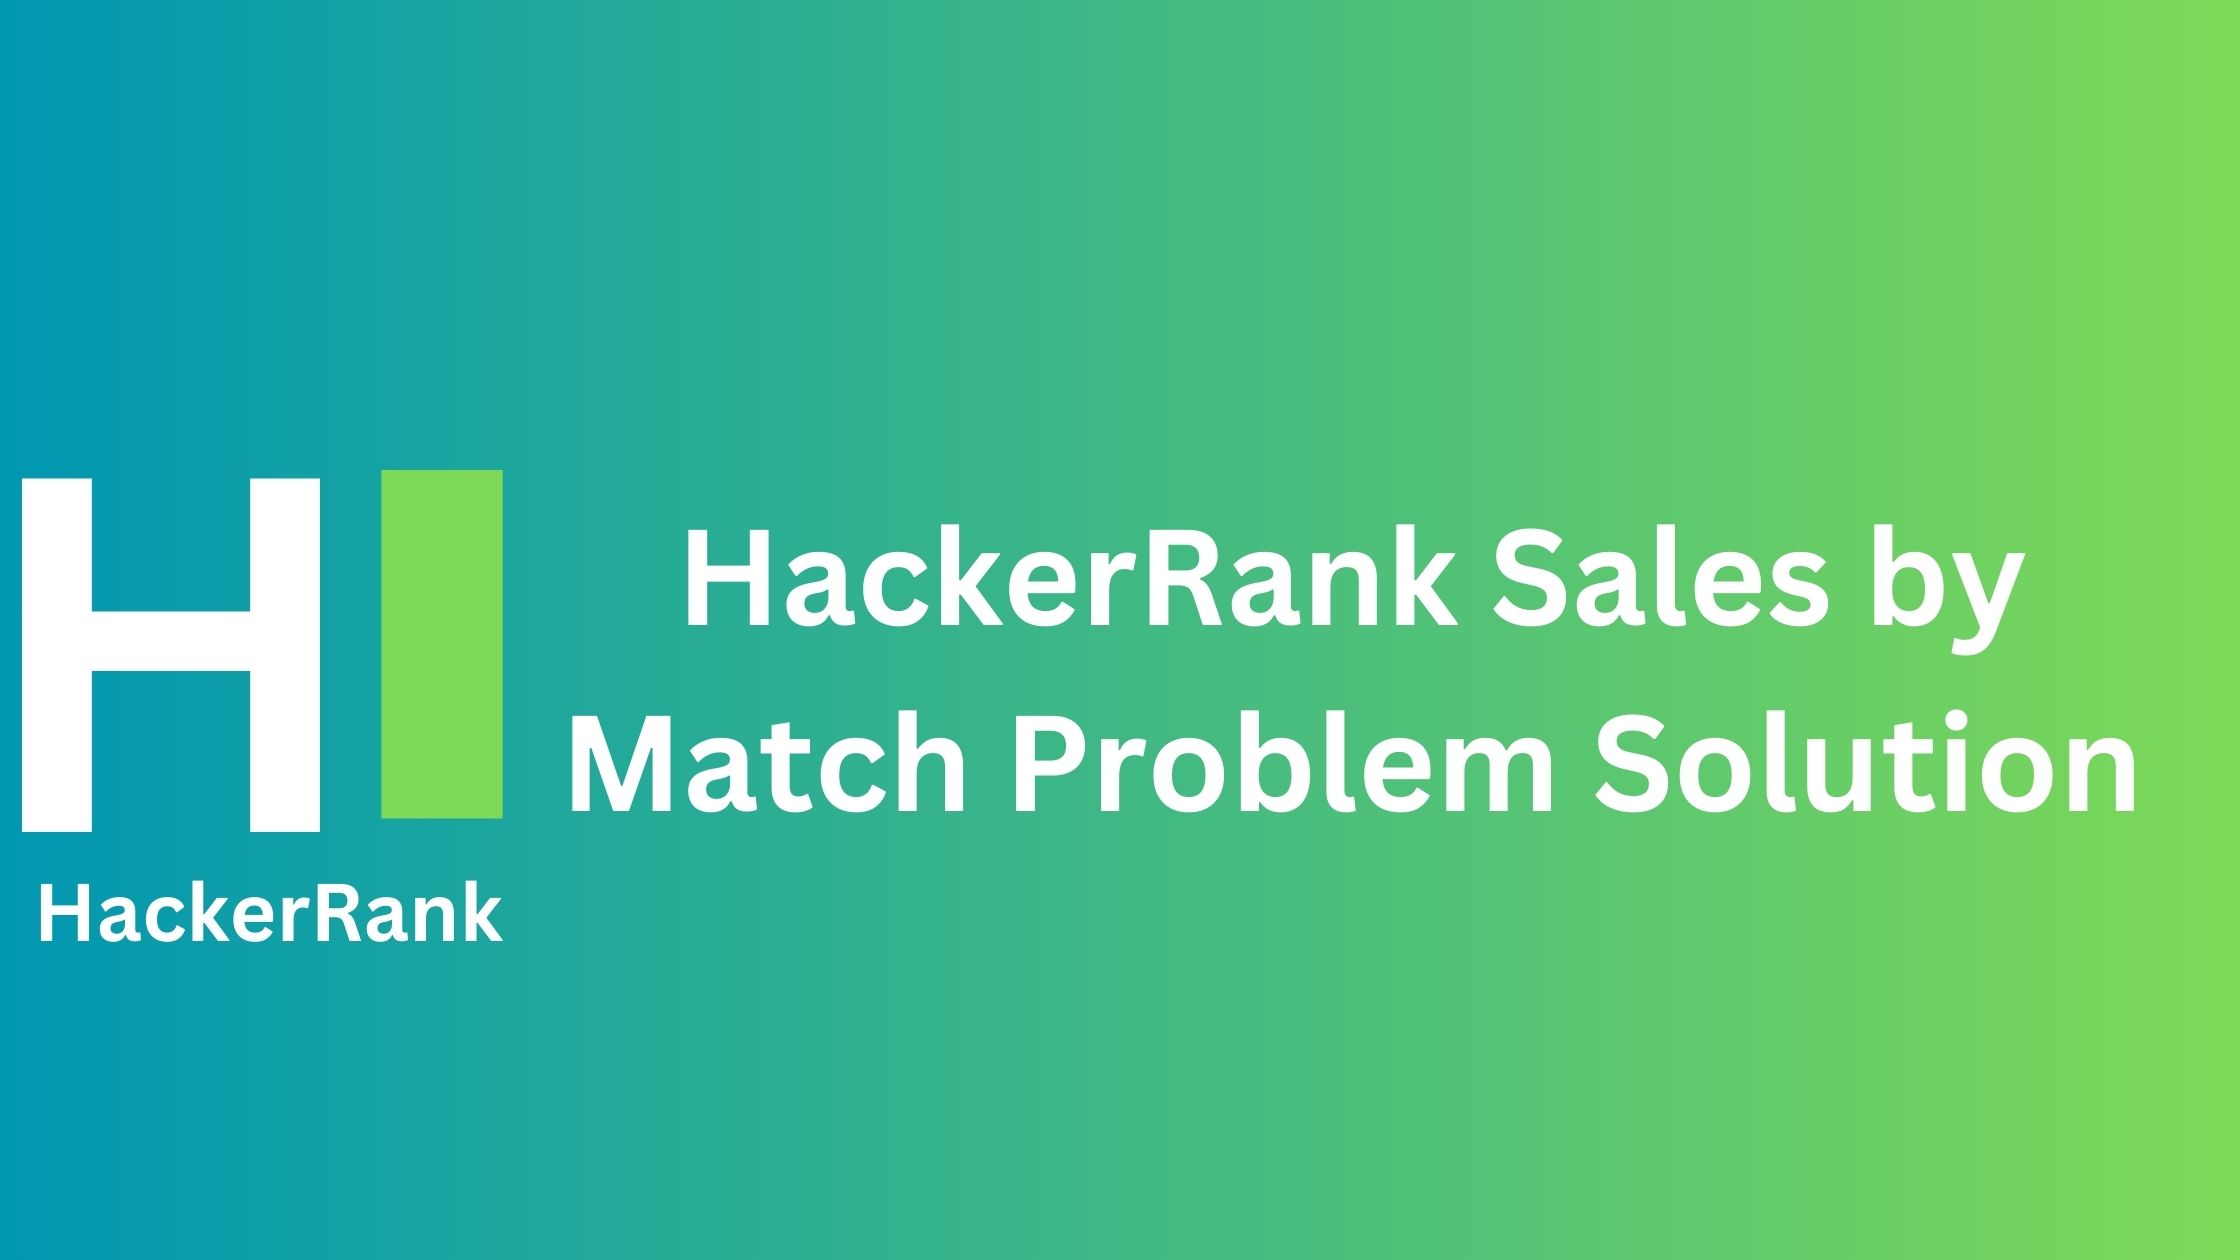 HackerRank Sales by Match Problem Solution